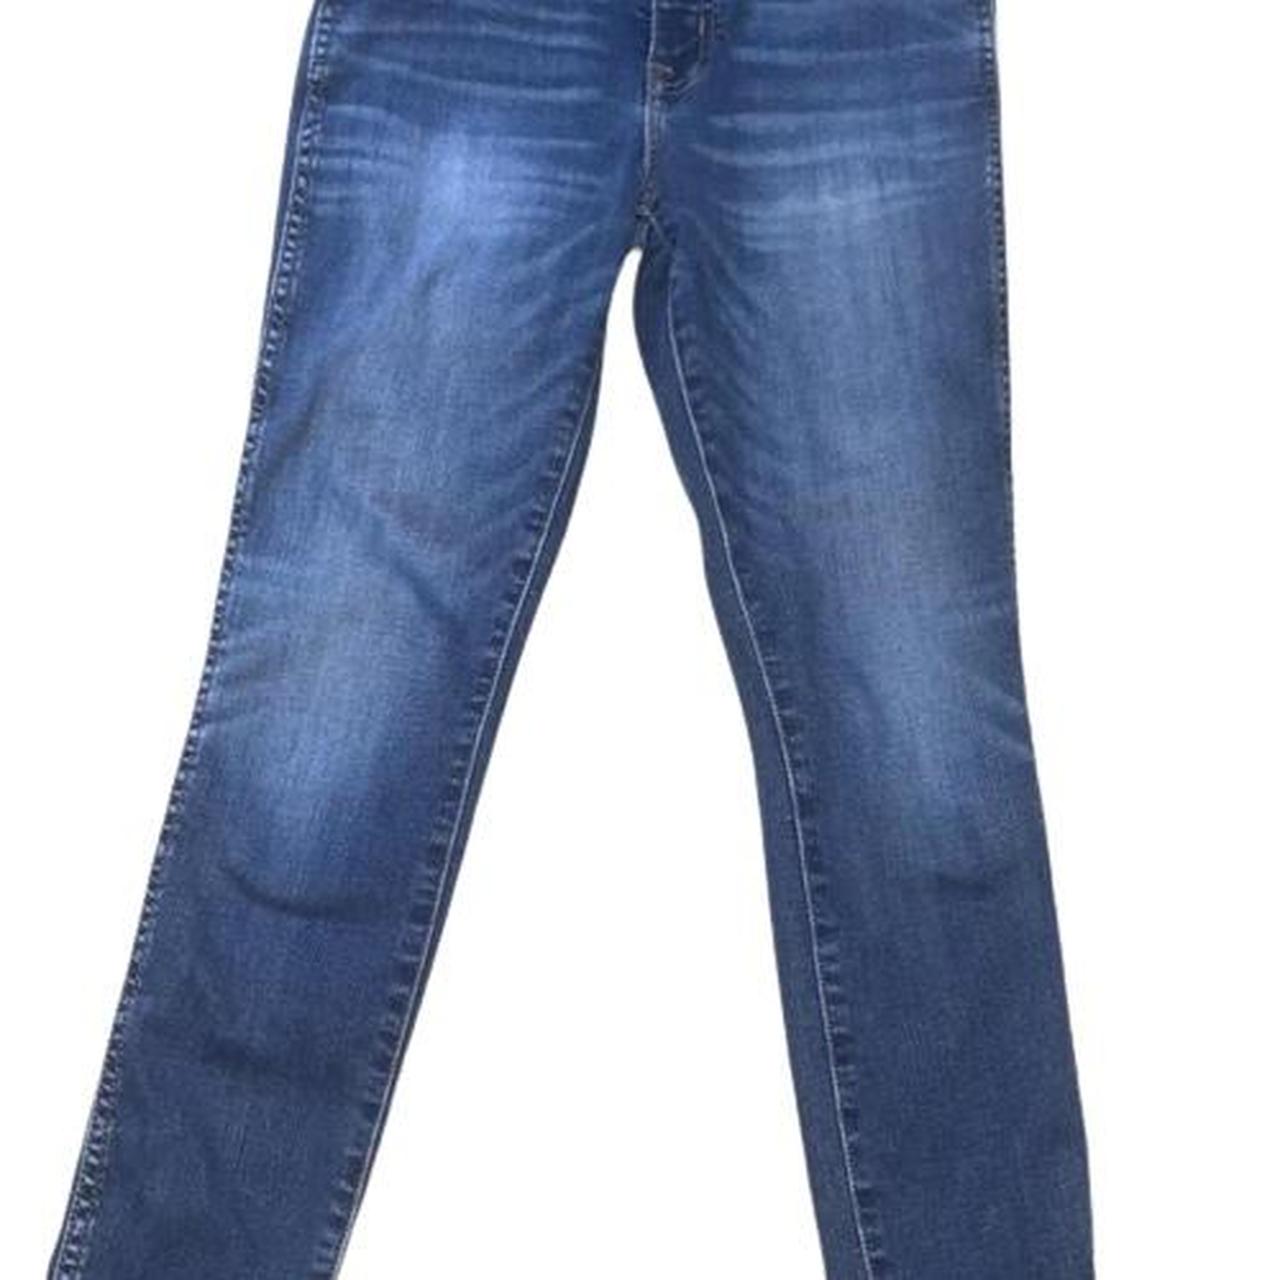 Costco Women's Navy Jeans | Depop